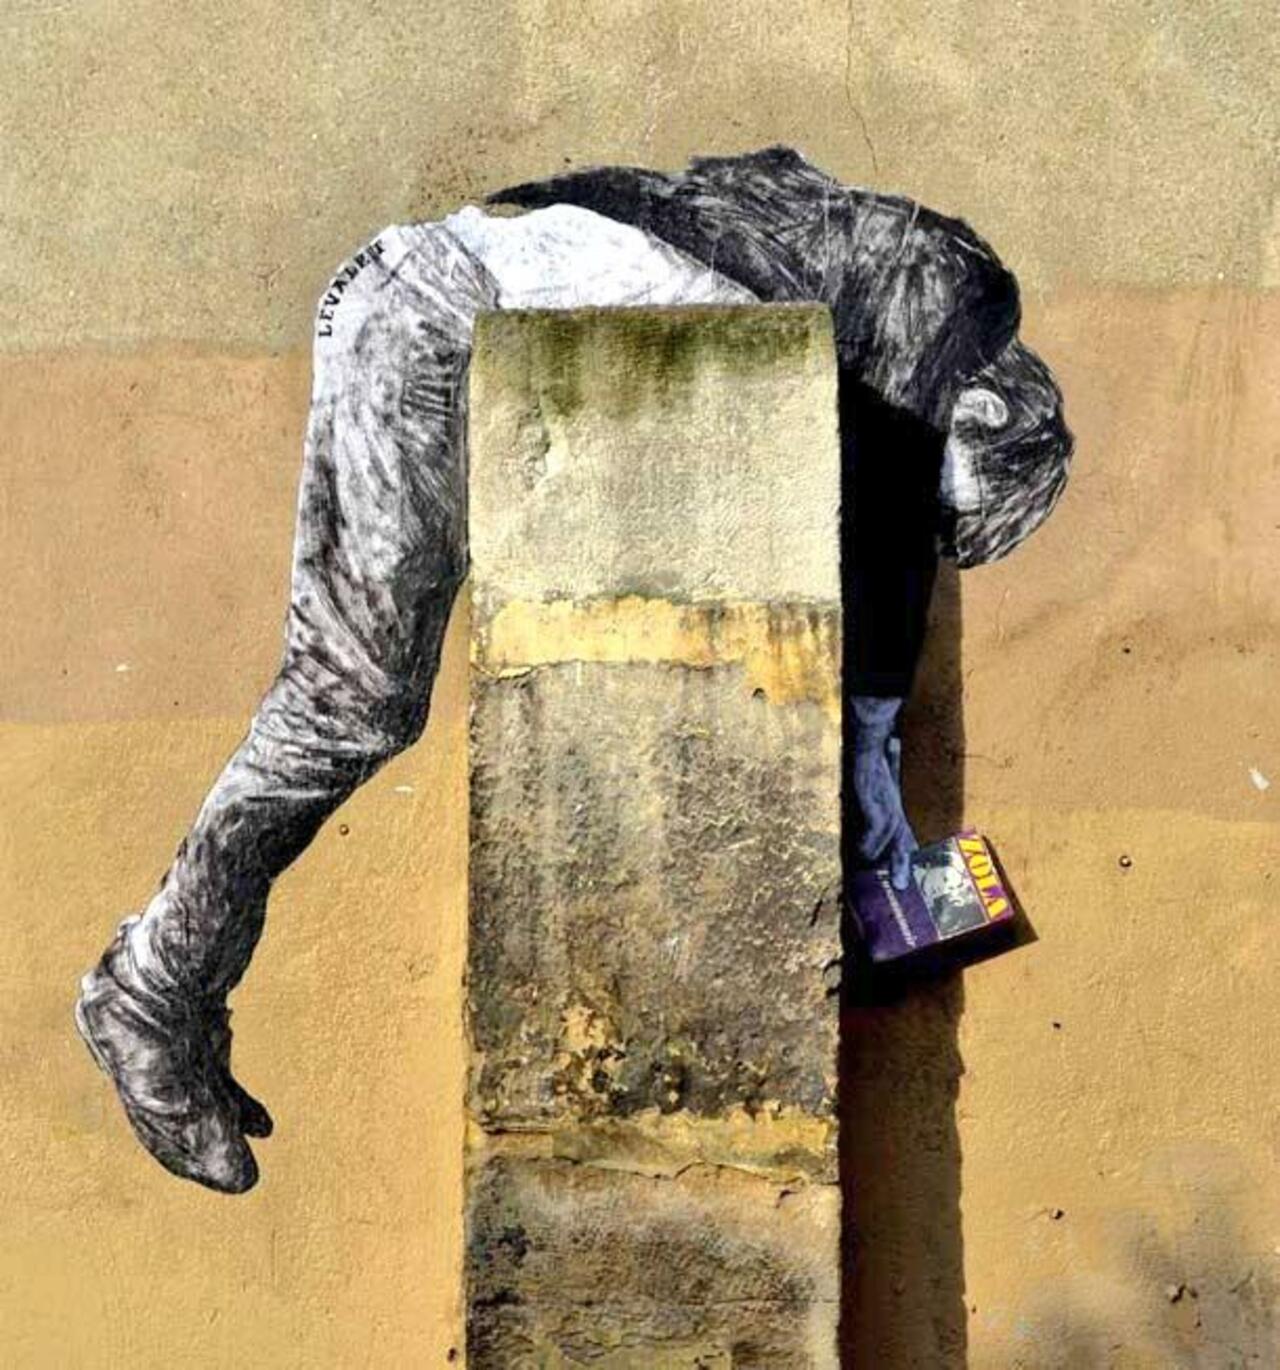 "@Pitchuskita: Street Art by french artist Levalet
#streetart #art #graffiti #urbanart http://t.co/wtx9yjSJnw"